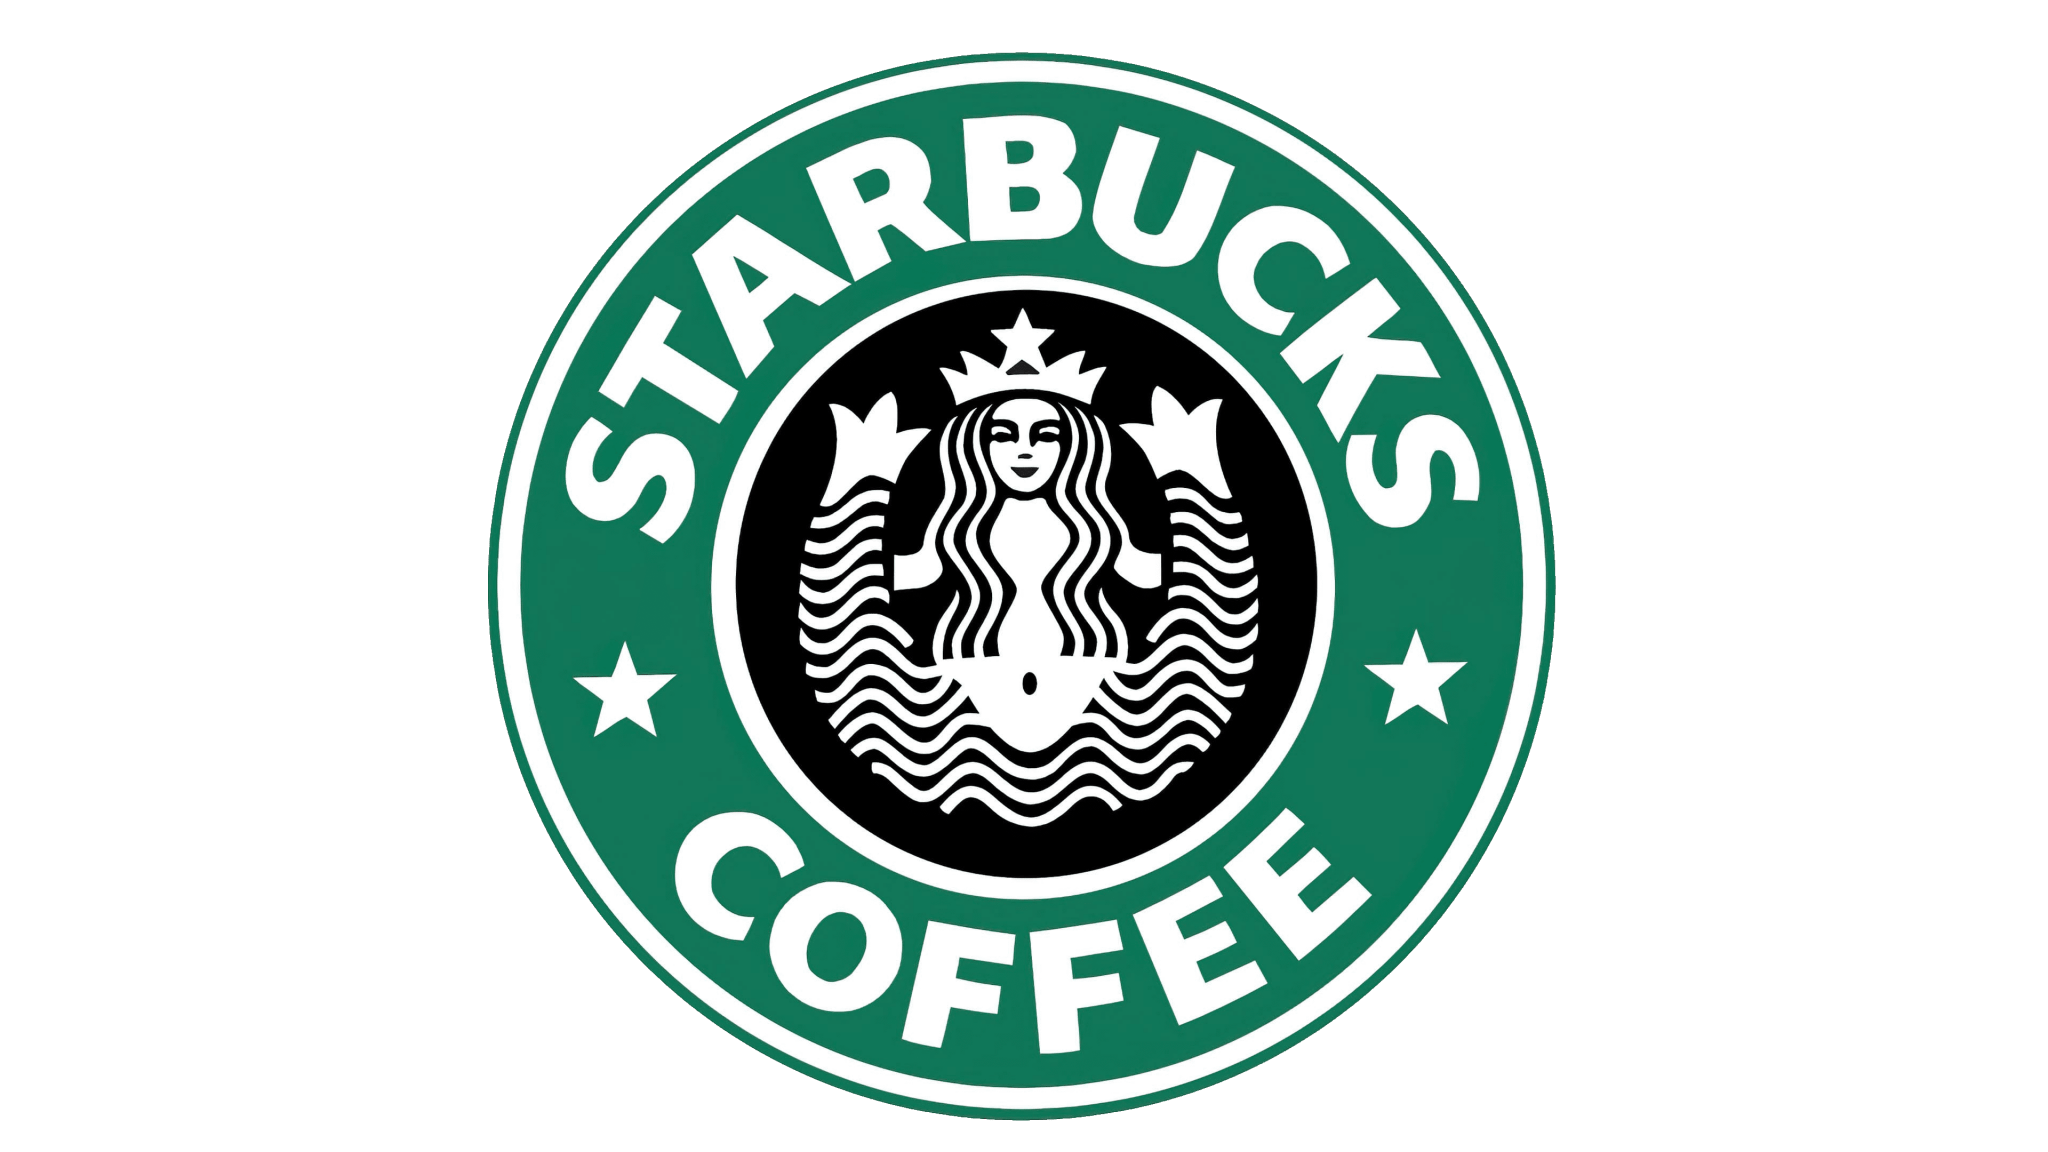 Starbucks Logo Download In Svg Vector Format Or In Png Format